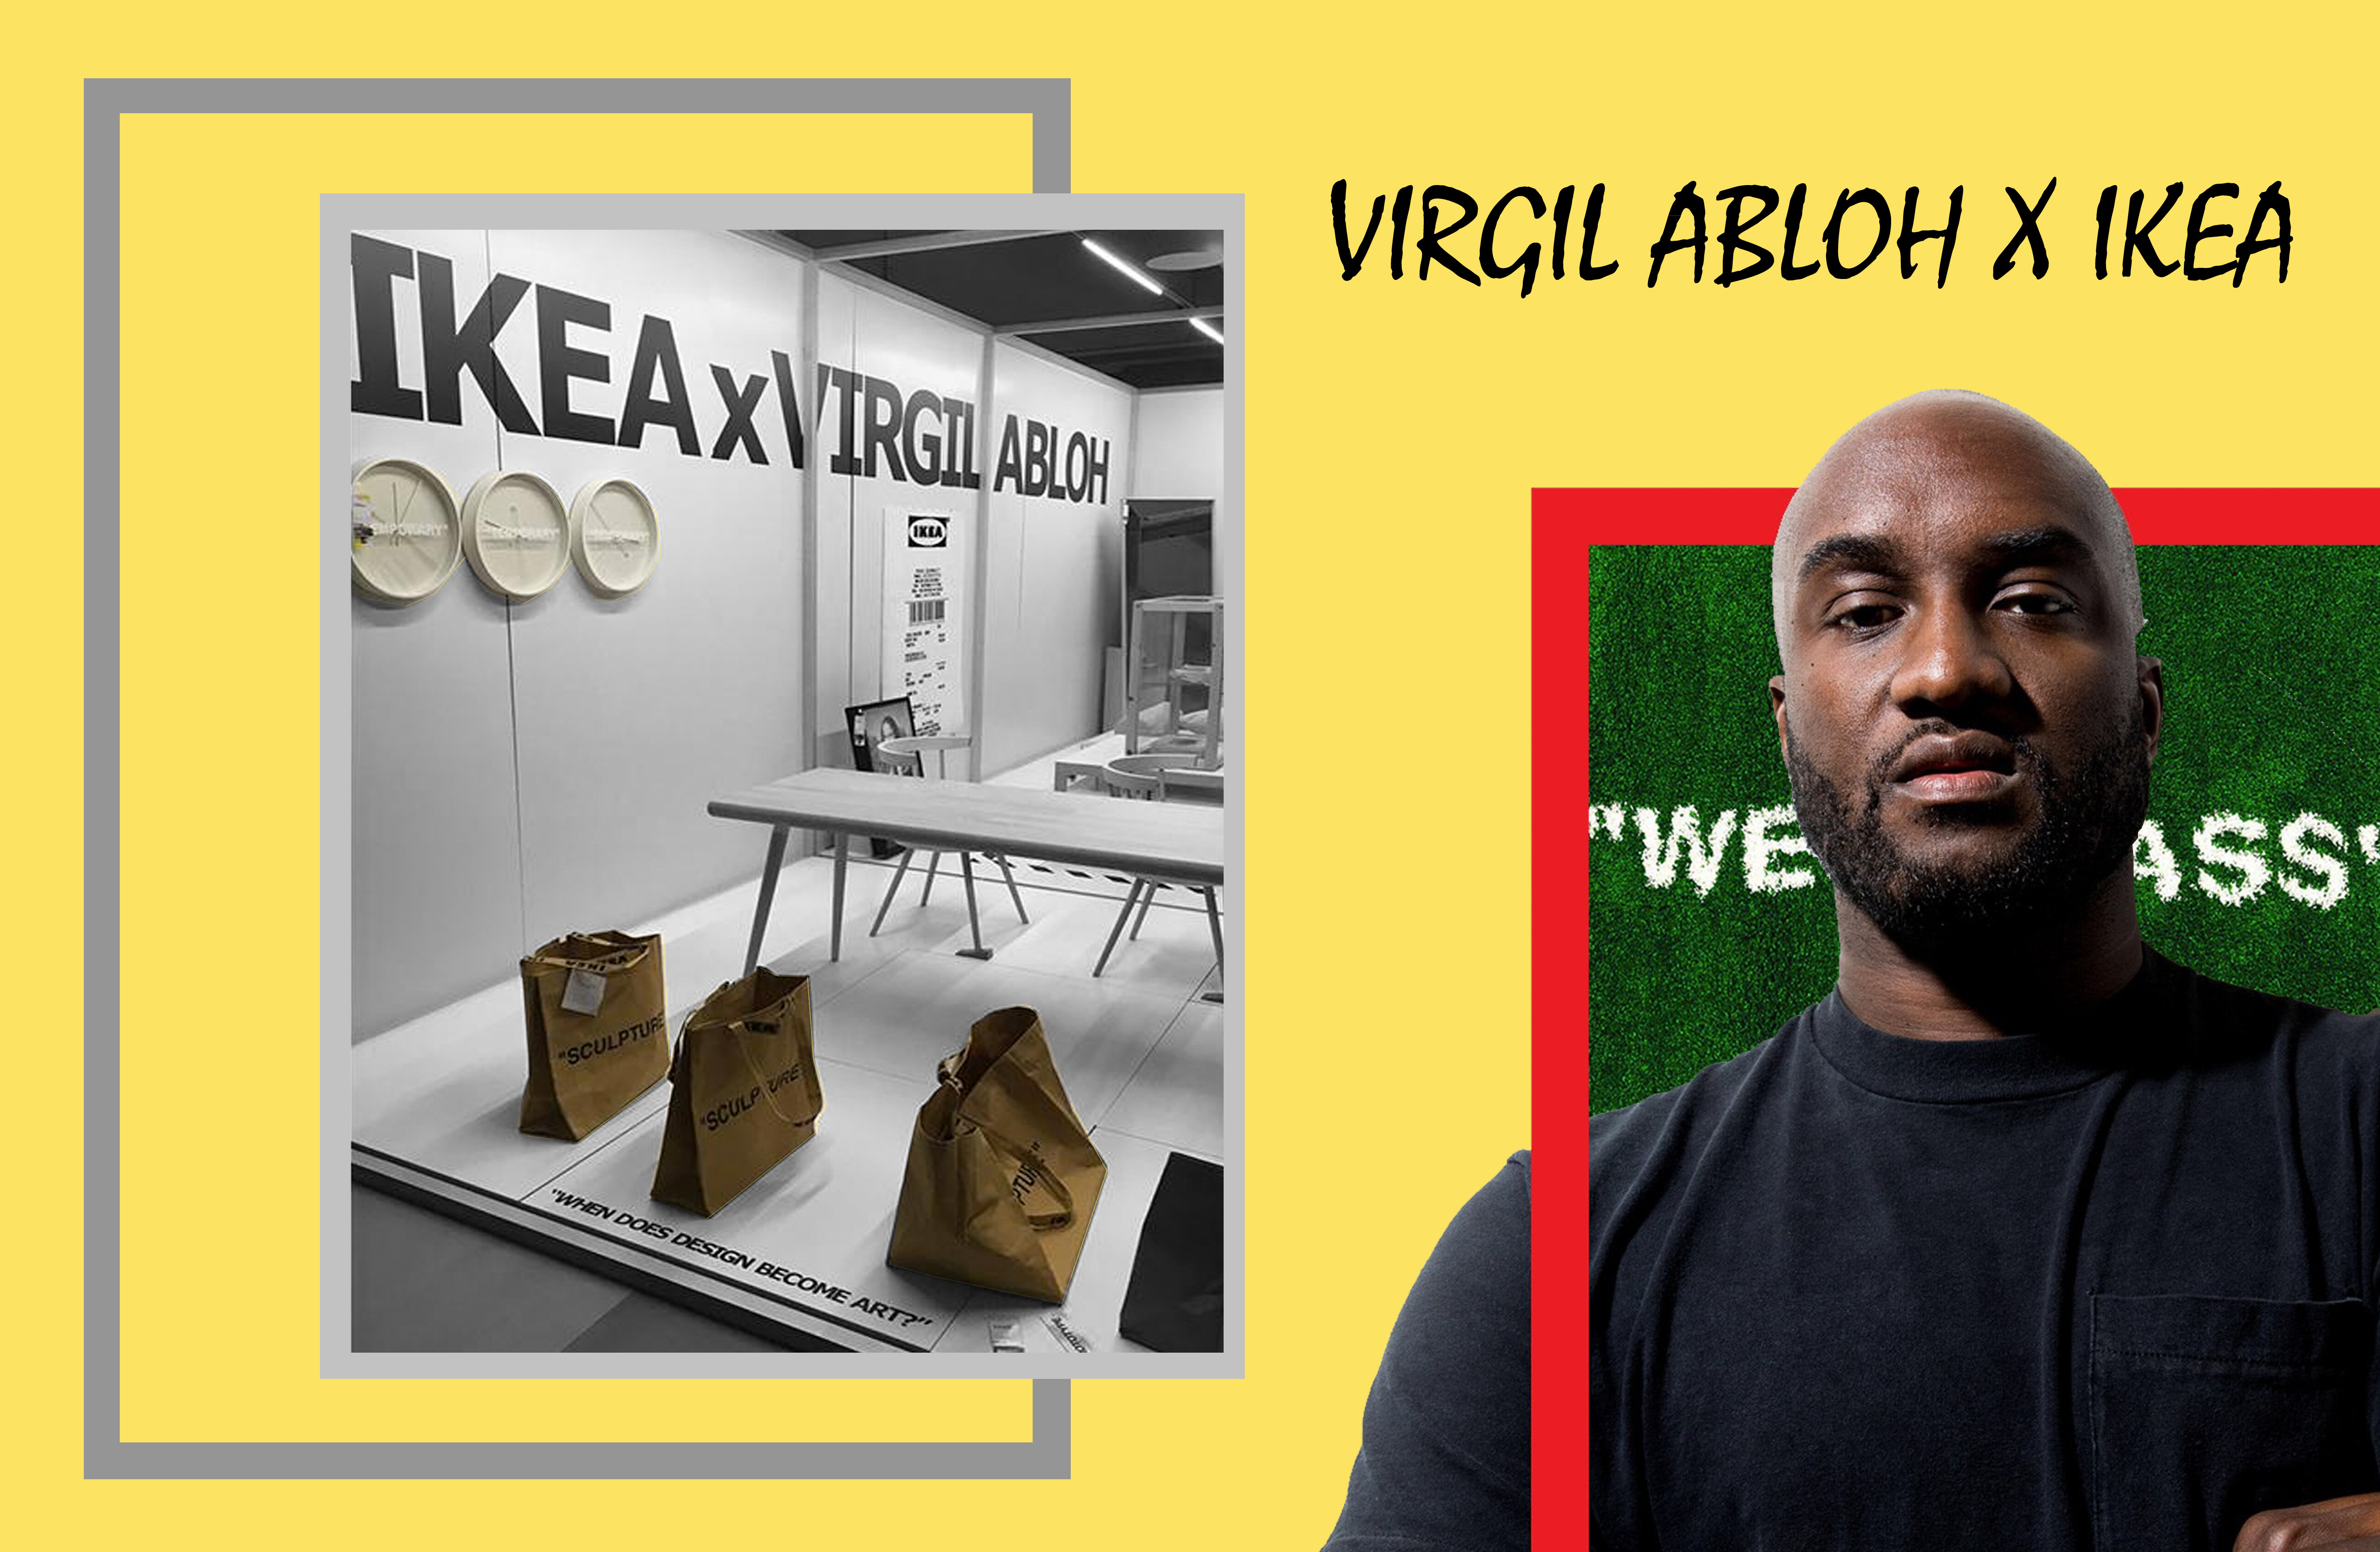 Watch Virgil Abloh's surreal new Ikea advert